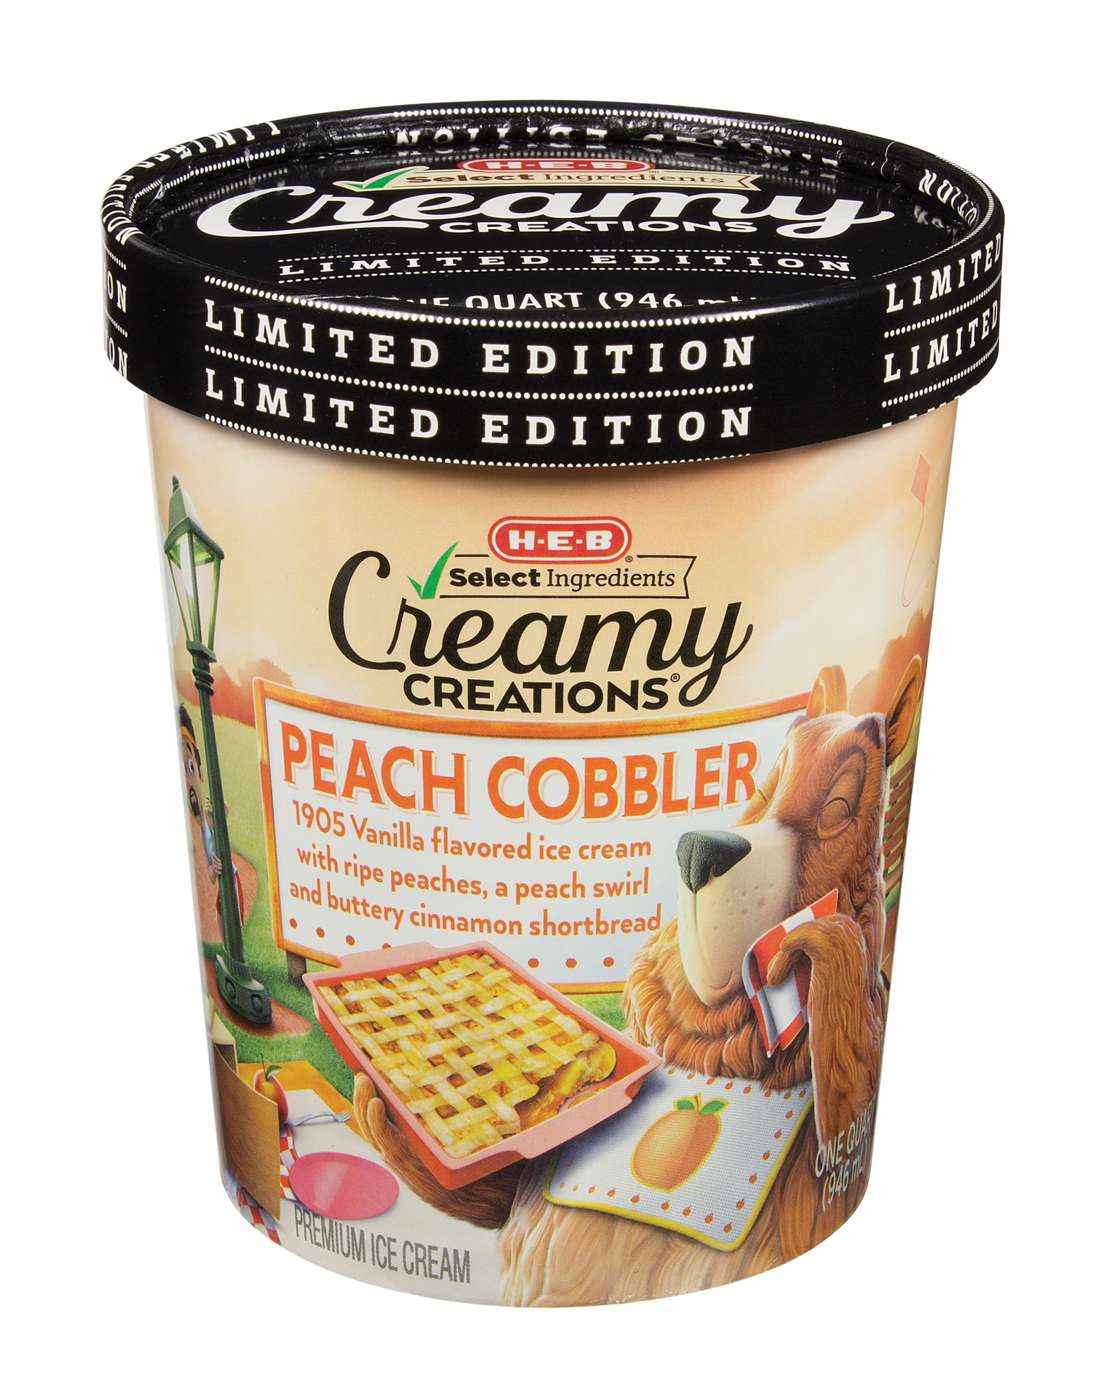 H-E-B Creamy Creations Peach Cobbler Limited Edition Ice Cream; image 1 of 2